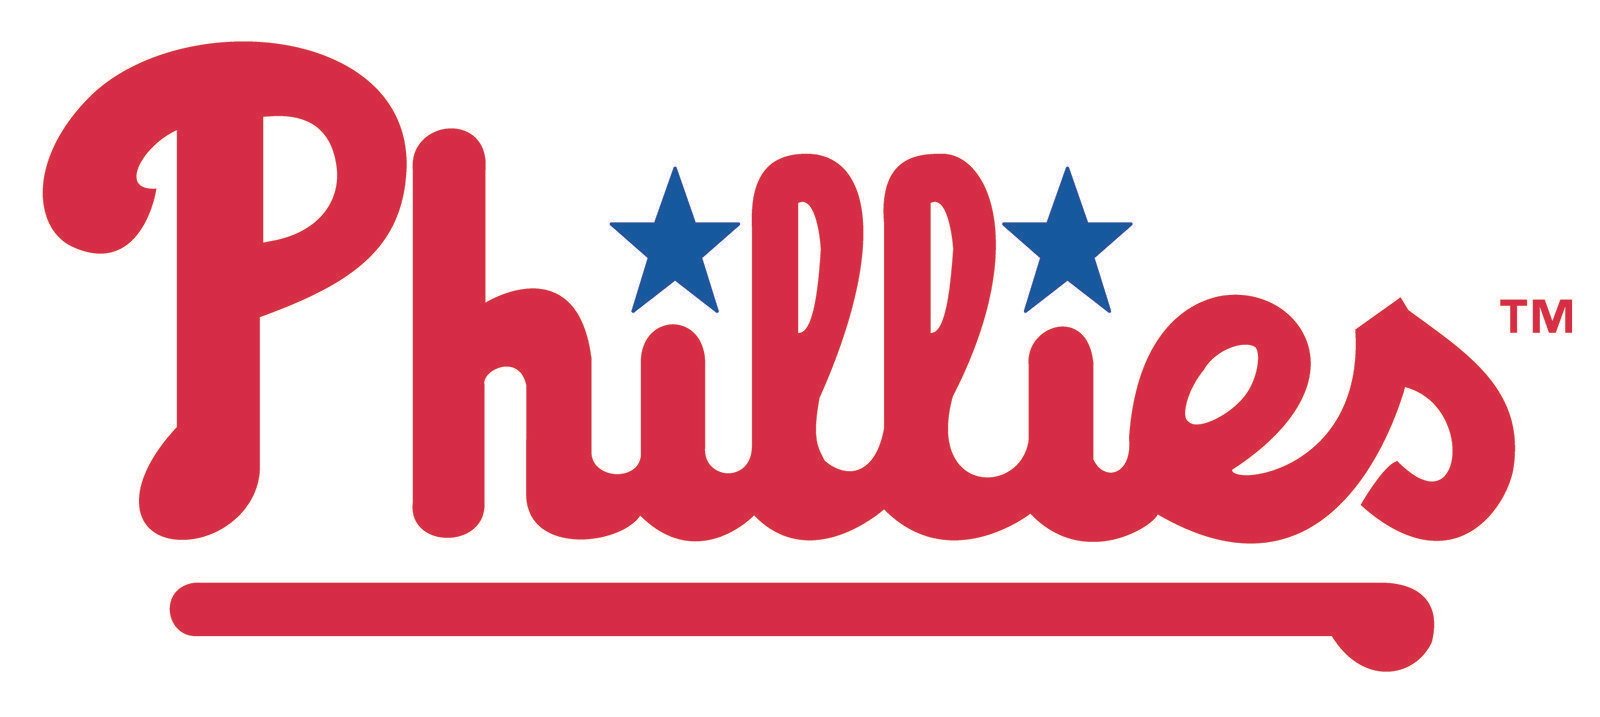 Phillies Logo - Font Phillies Logo. All logos world. Logos, Fonts